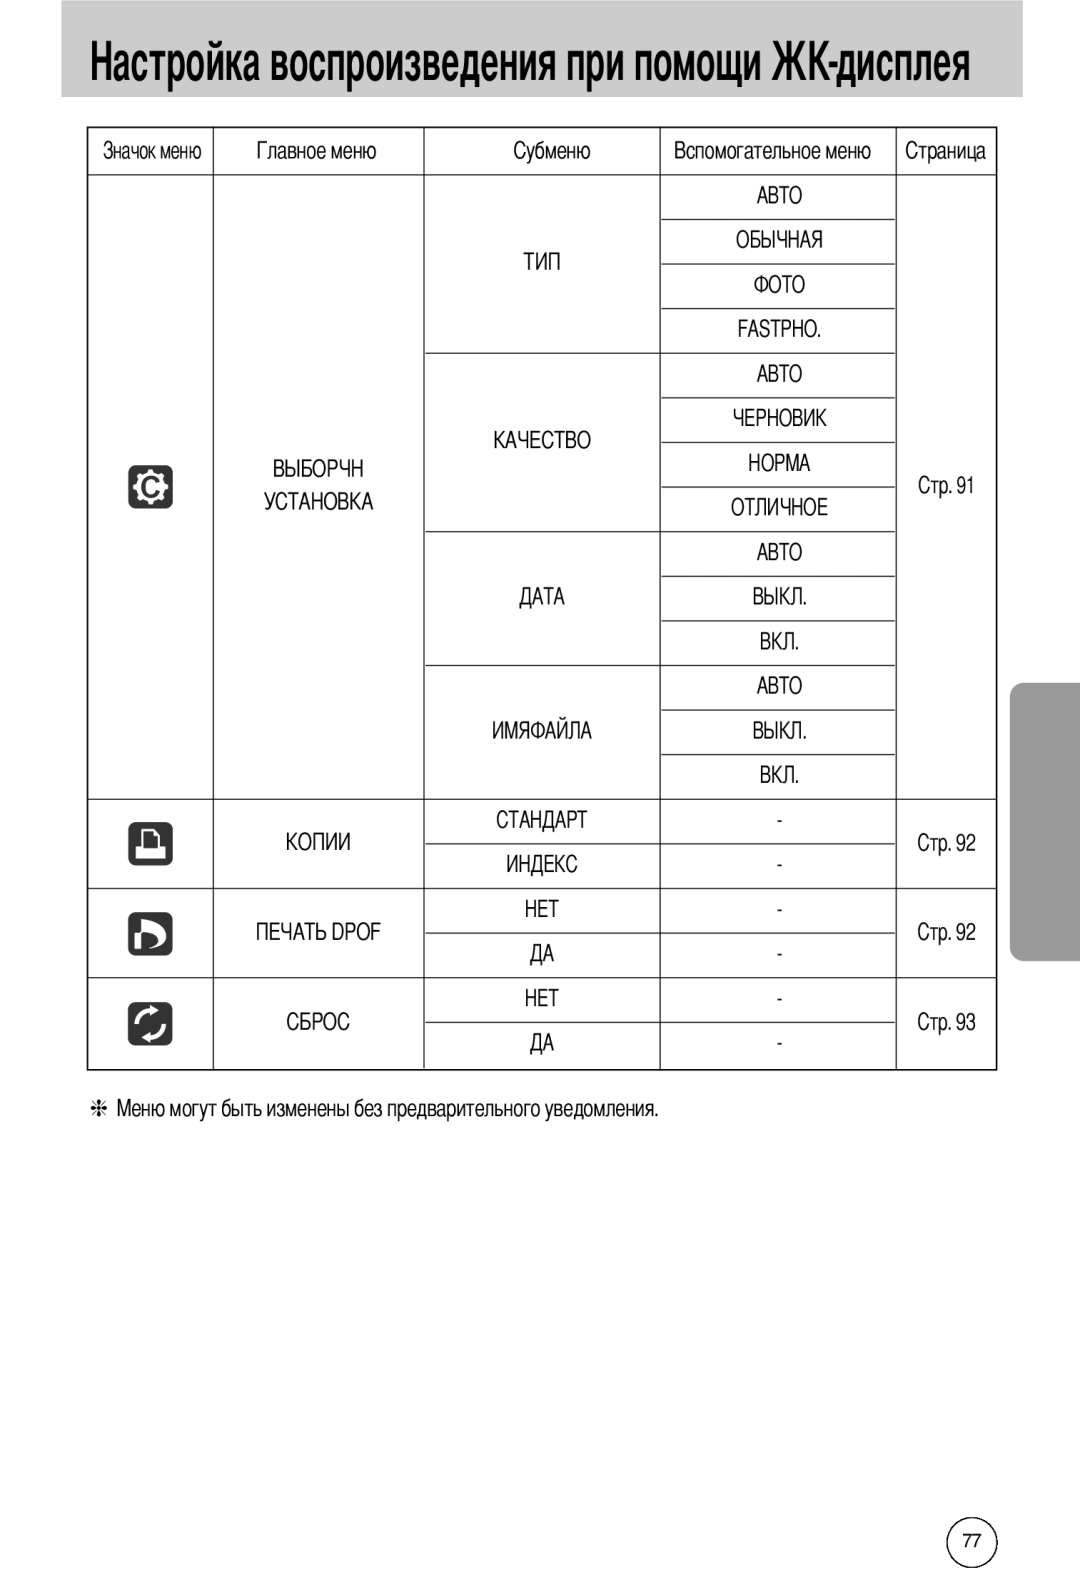 Samsung EC-I50ZZSBB/AS, EC-I50ZZBBA/FR, EC-I50ZZRBA/FR, EC-I50ZZSBA/AS, EC-I50ZZSBA/GB manual А О Fastpho А О А А, дисплея 